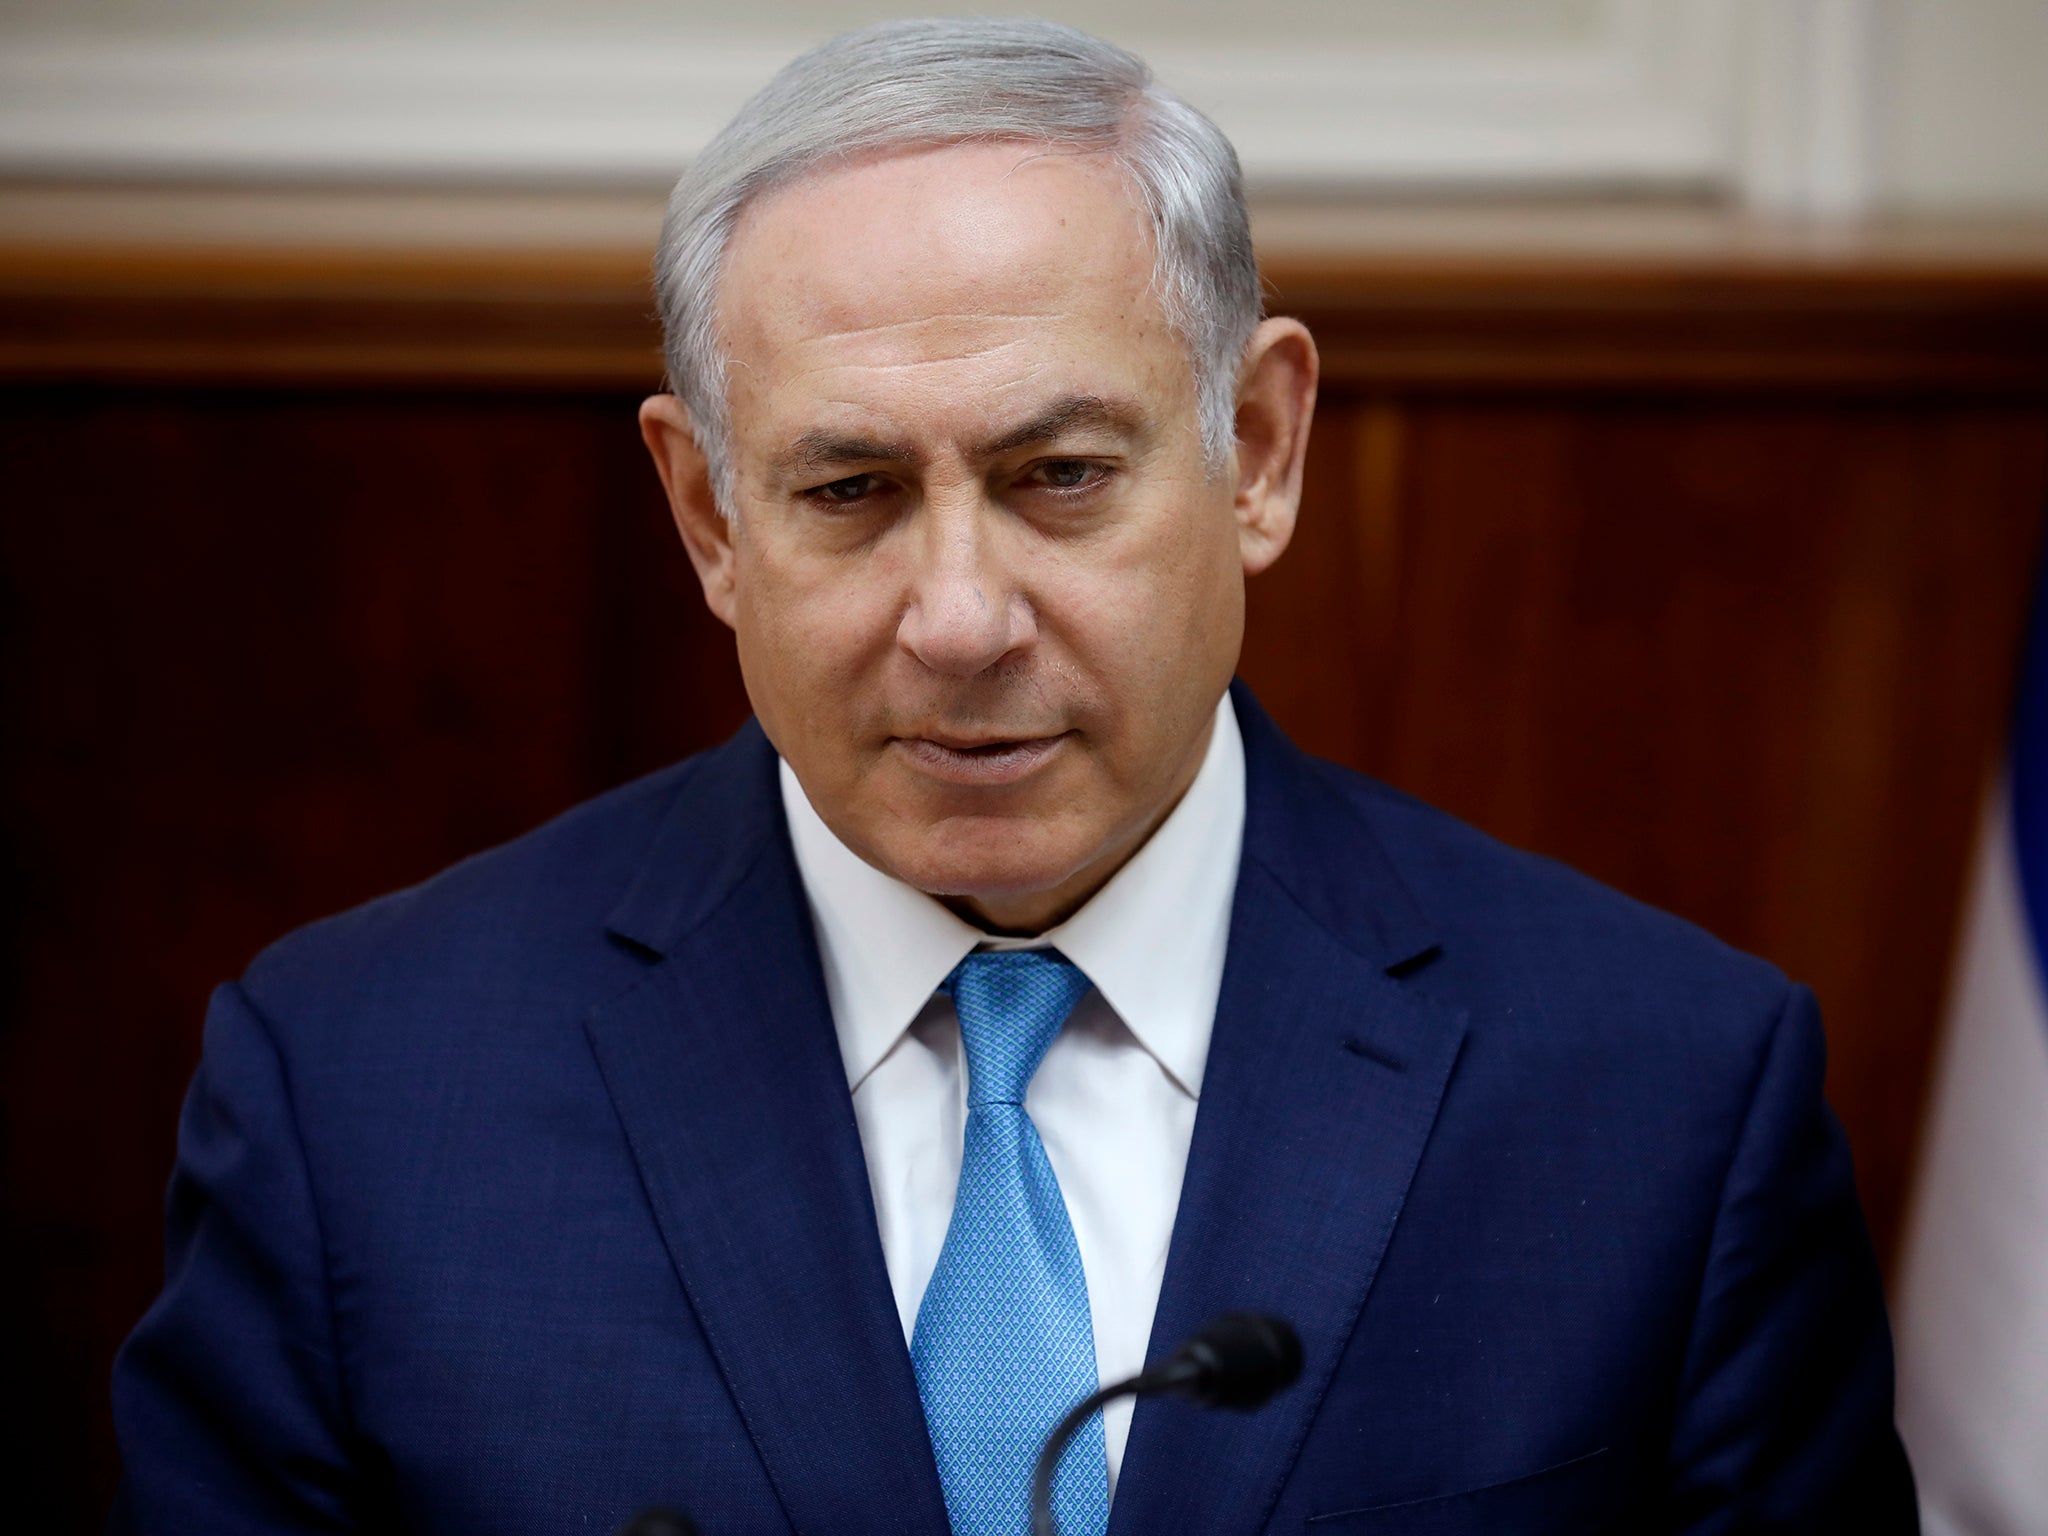 Israeli Prime Minister Benjamin Netanyahu denies any wrongdoing